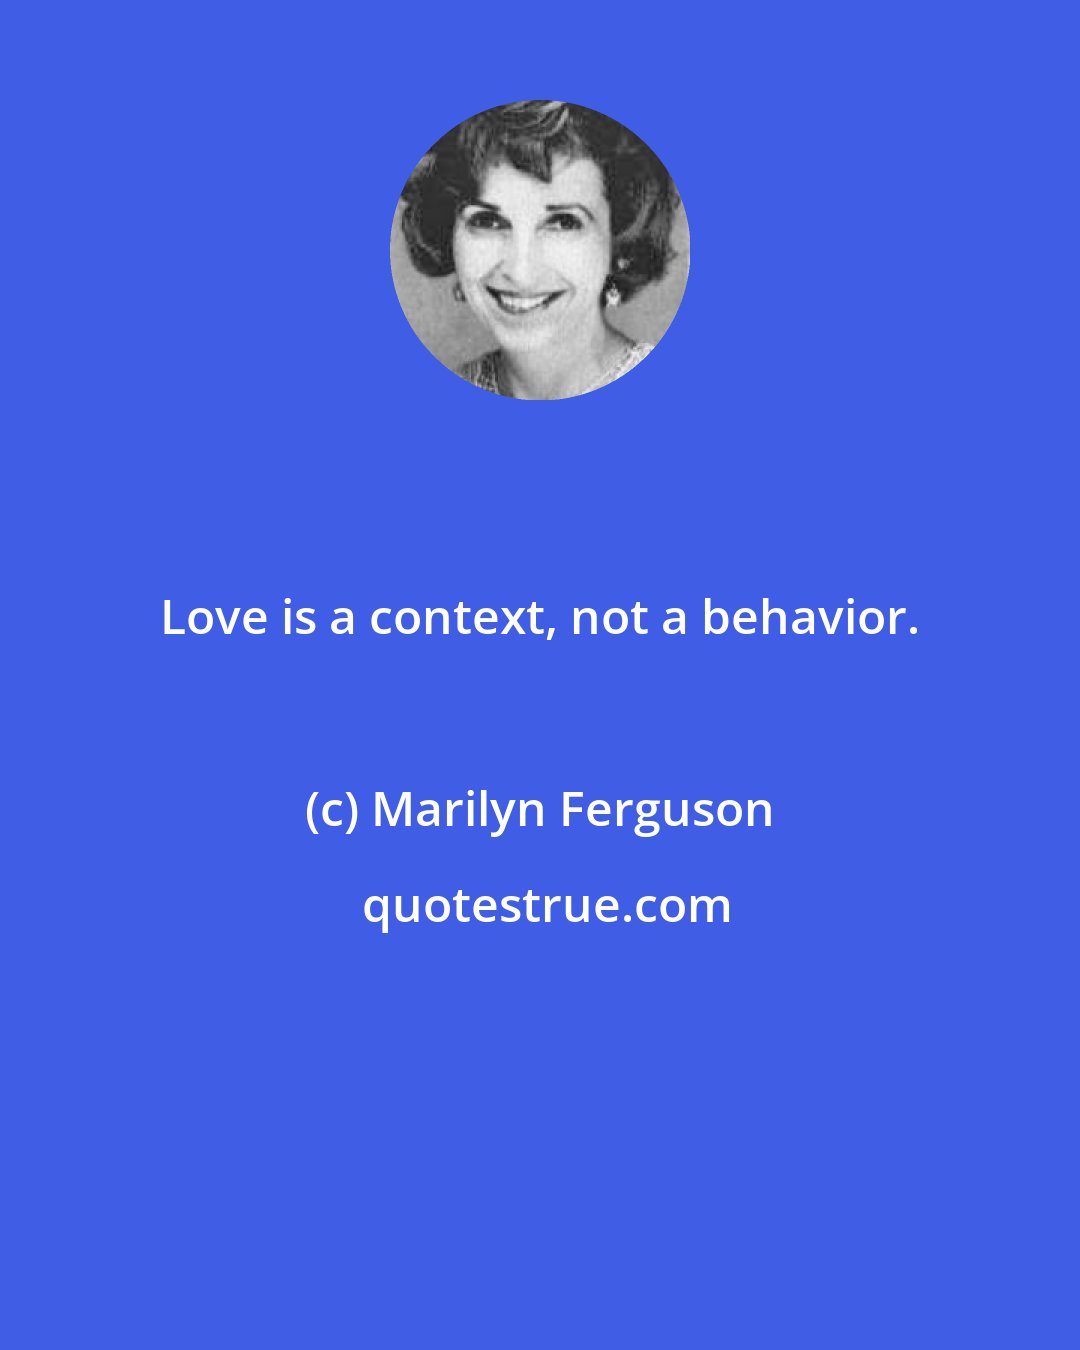 Marilyn Ferguson: Love is a context, not a behavior.